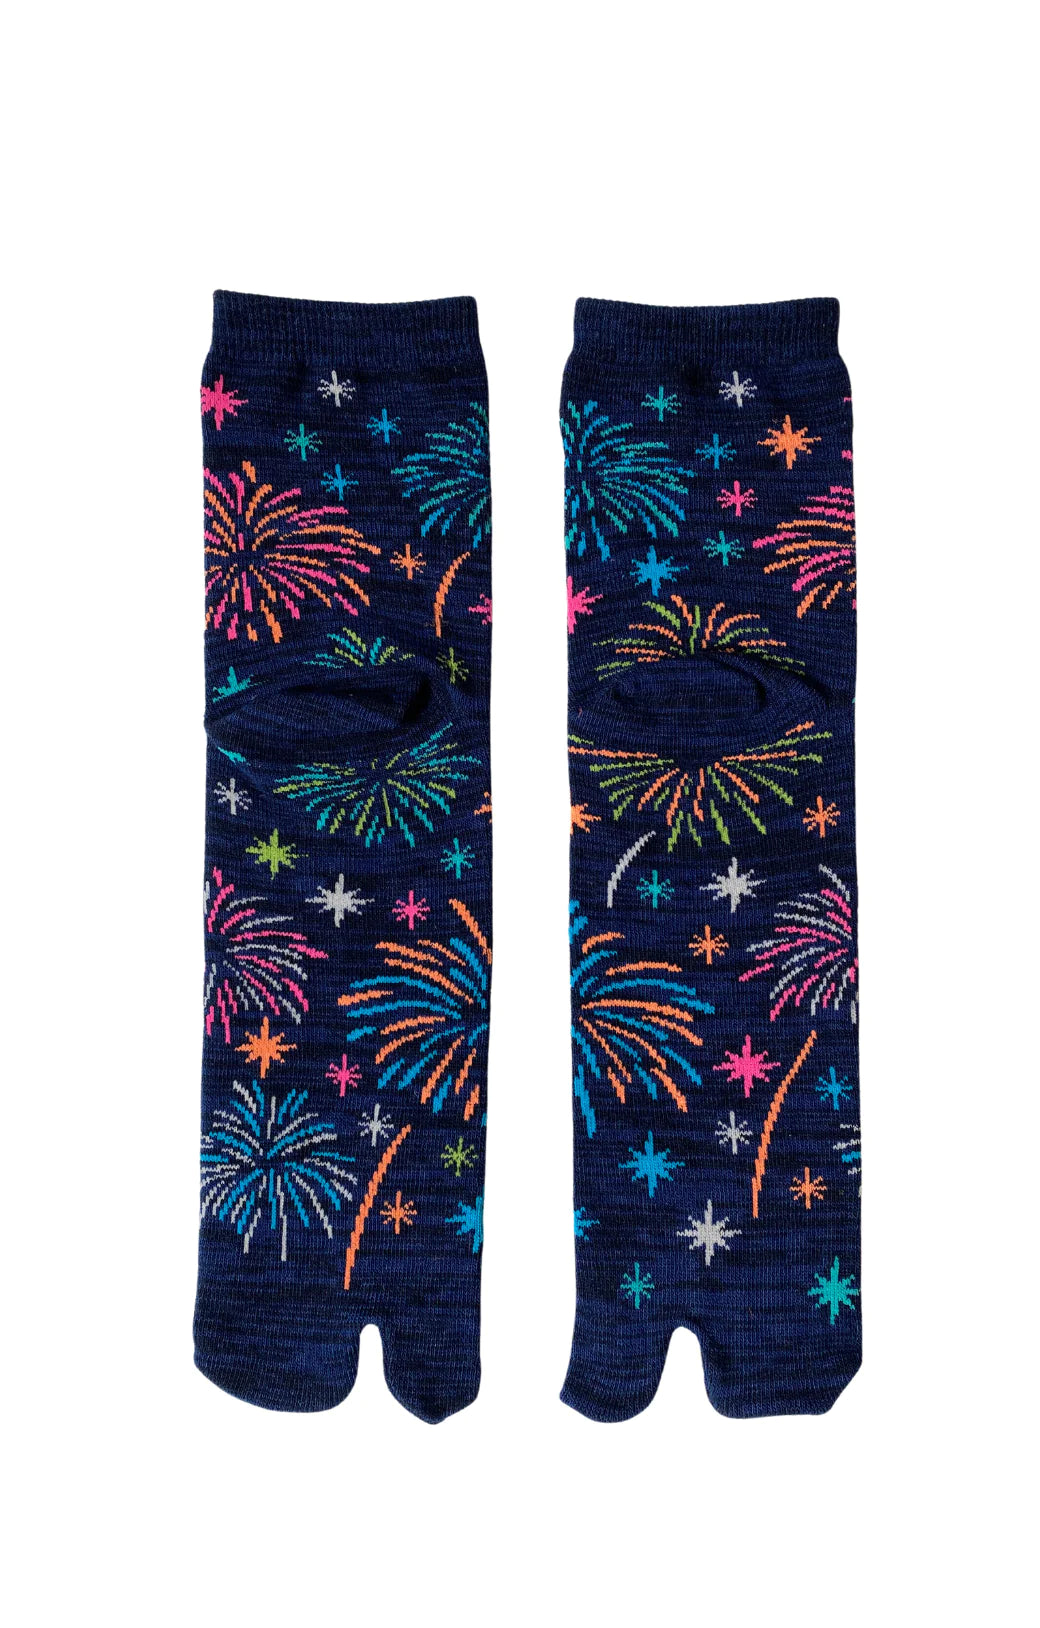 Socks by NINJA SOCKS under the trade name Hanabi Fire Works Tabi Toe Socks, back view in Navy color with colorful fireworks design